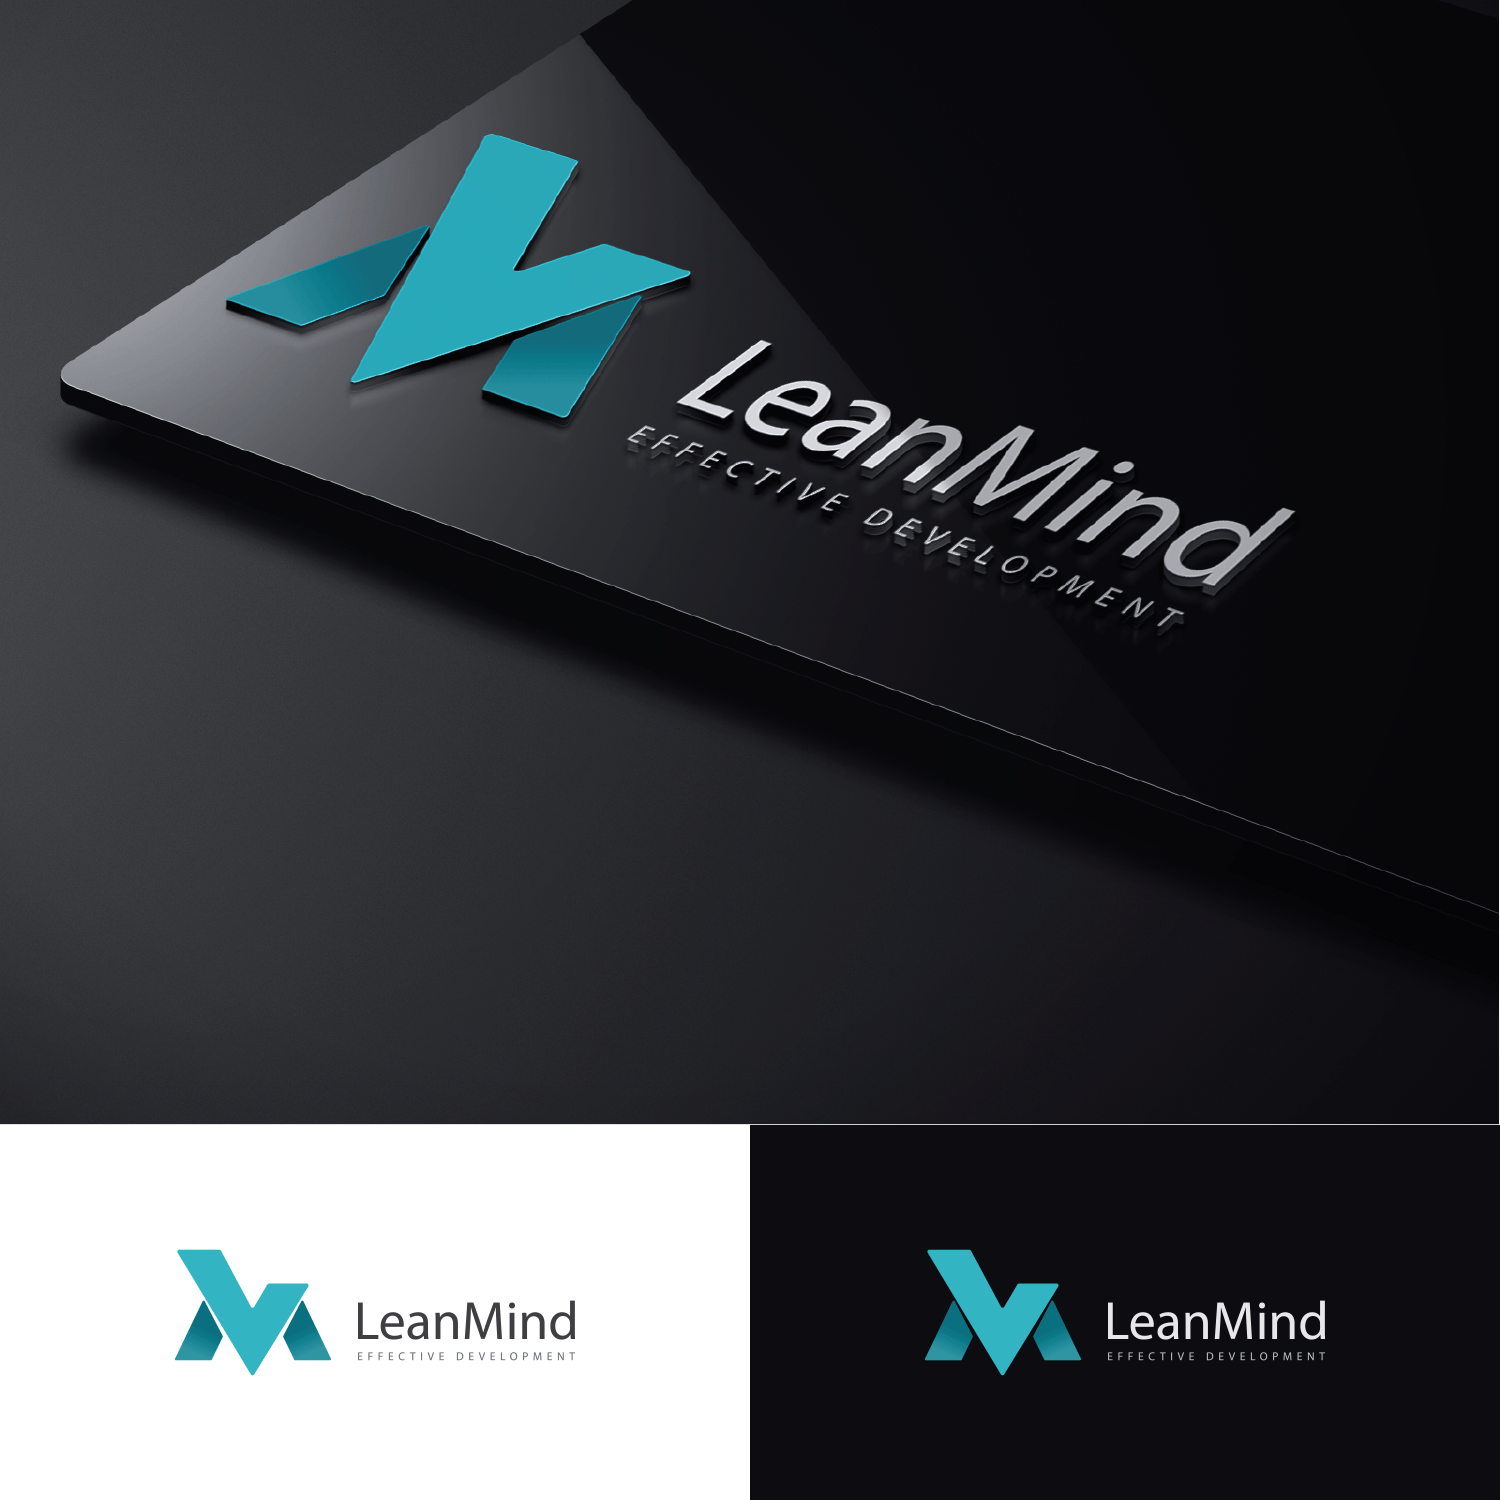 Ble Logo - Bold, Serious, Software Development Logo Design for LeanMind ...